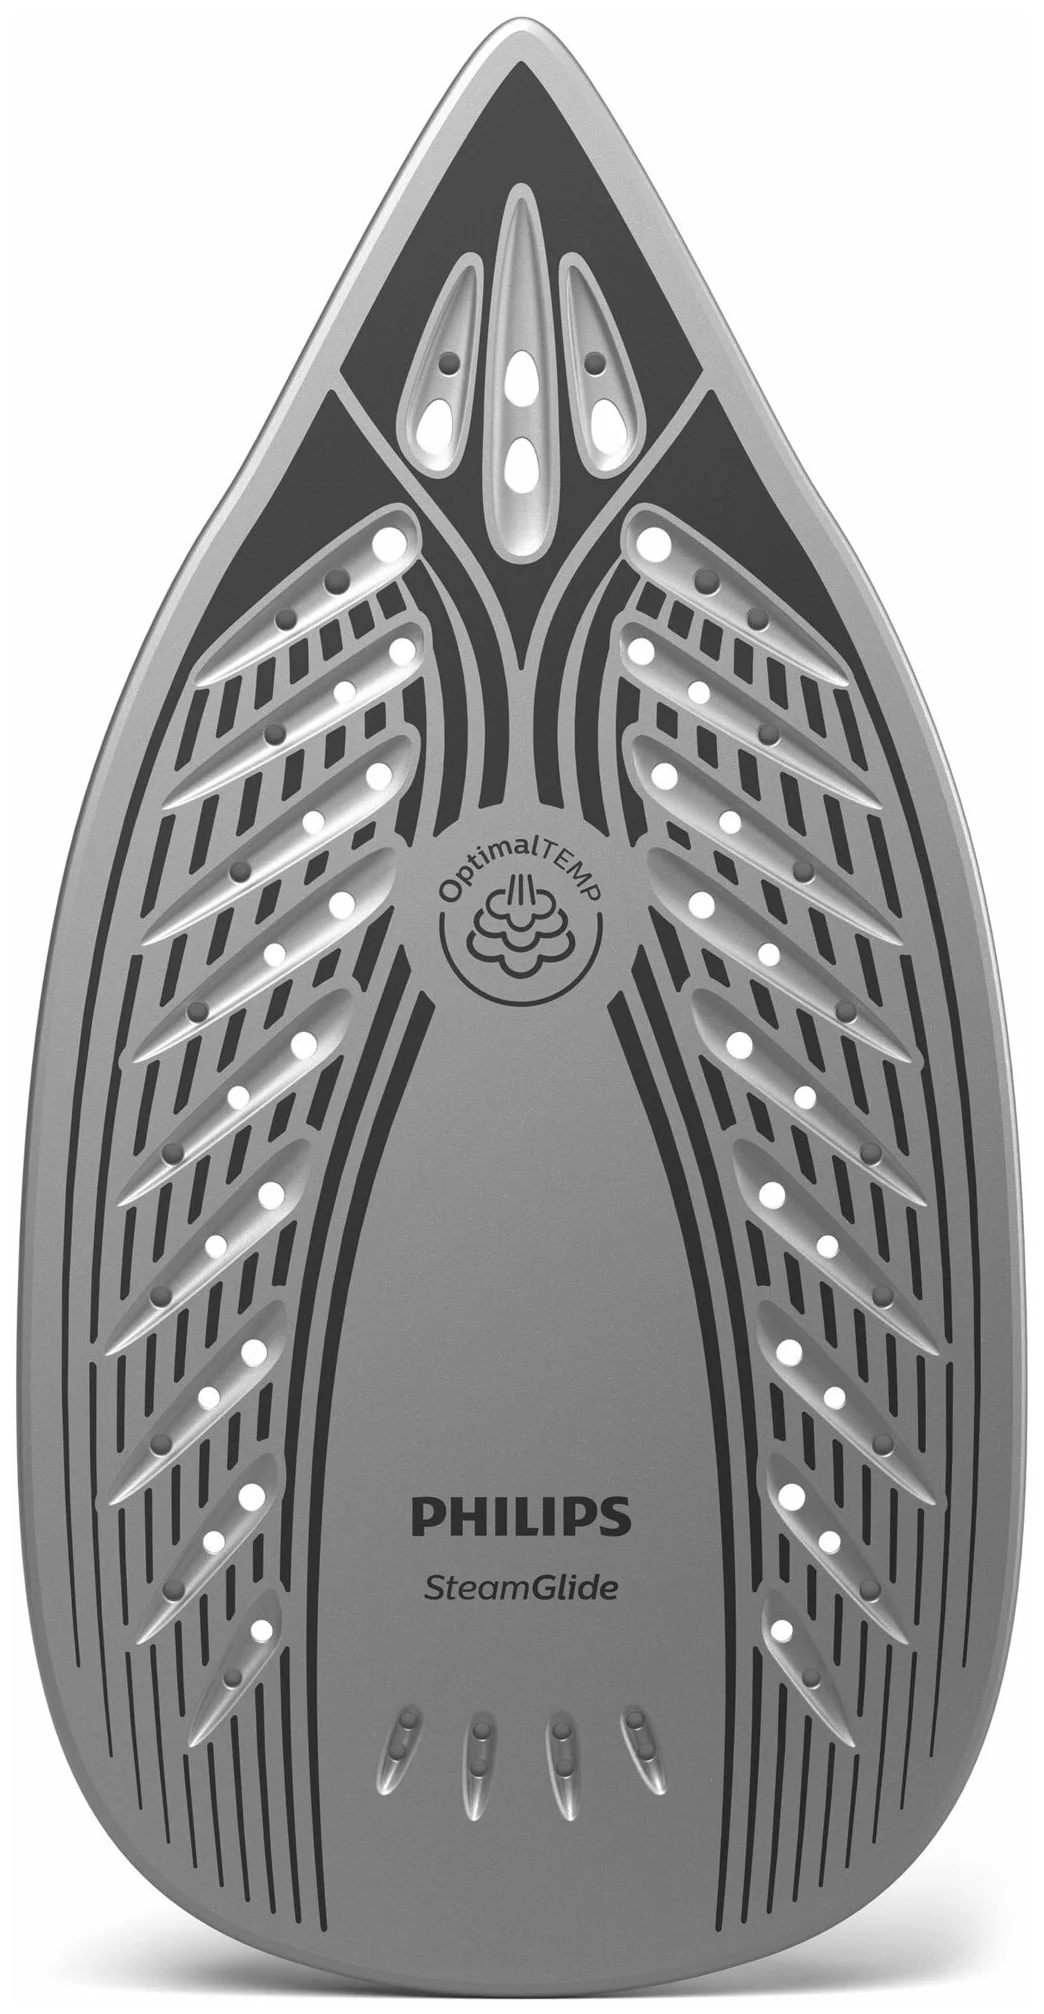 Philips GC7920/20 PerfectCare Compact Plus - вертикальное отпаривание